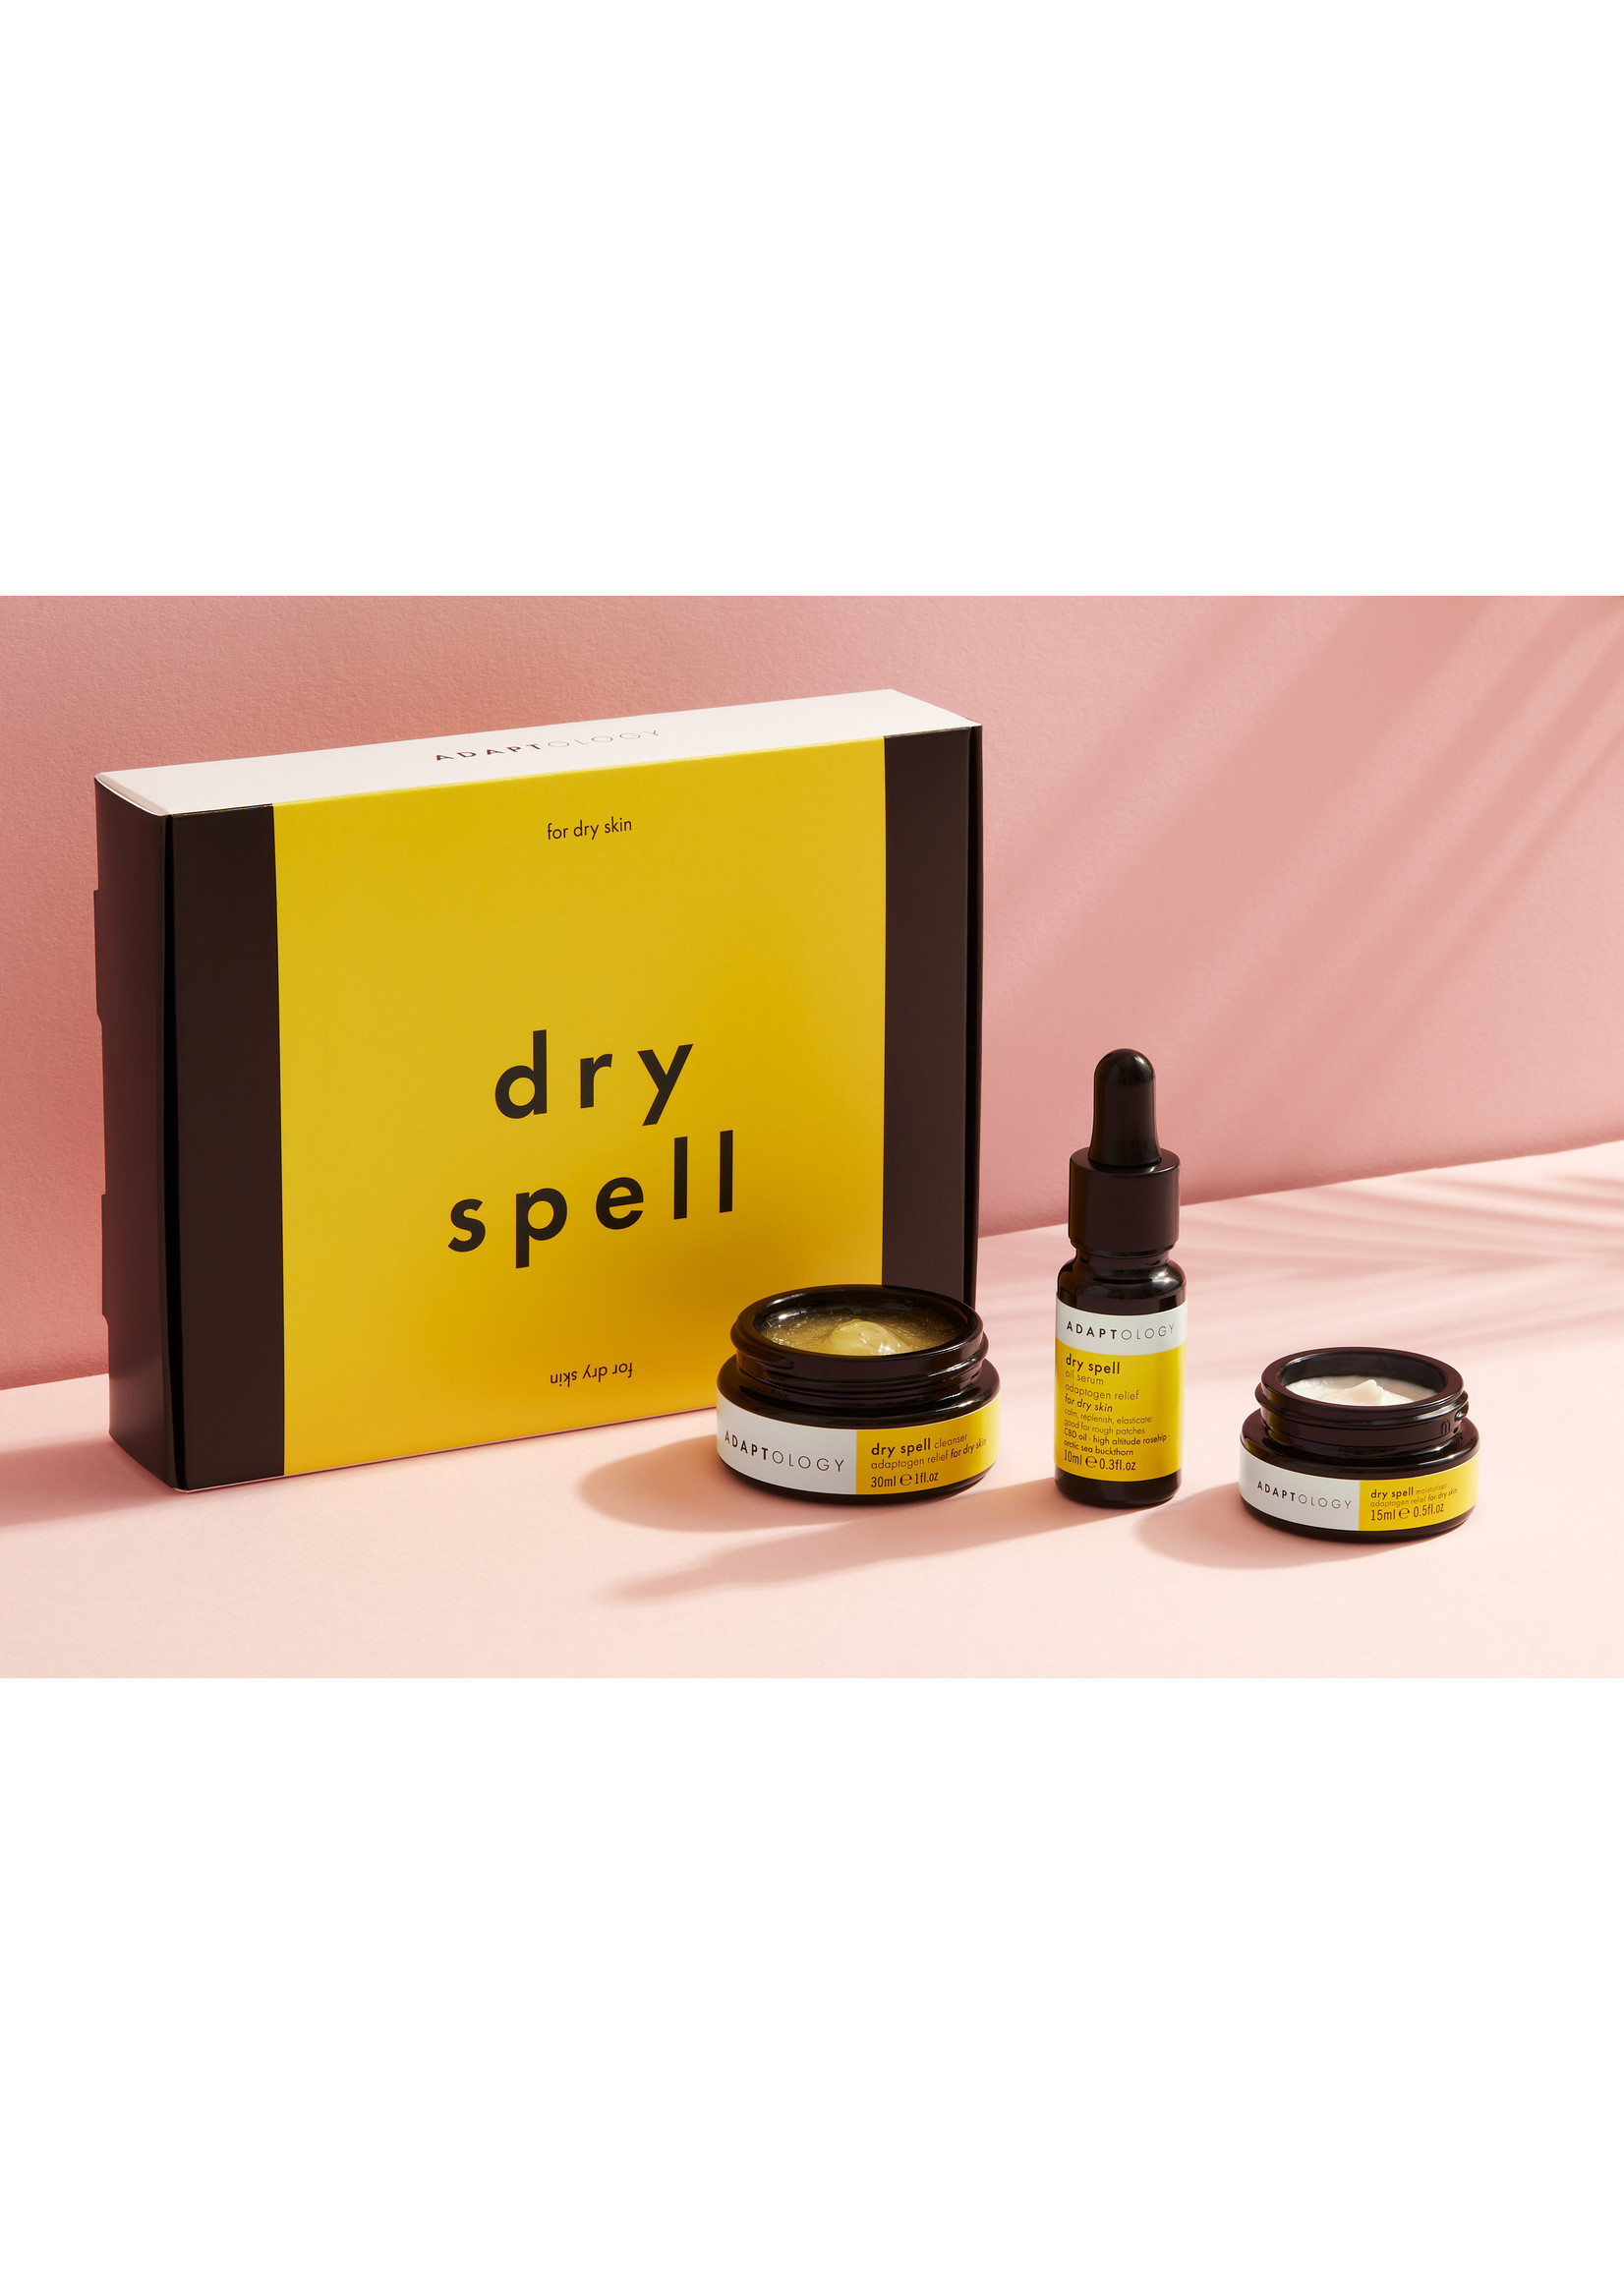 Adaptology Dry spell discovery mini set